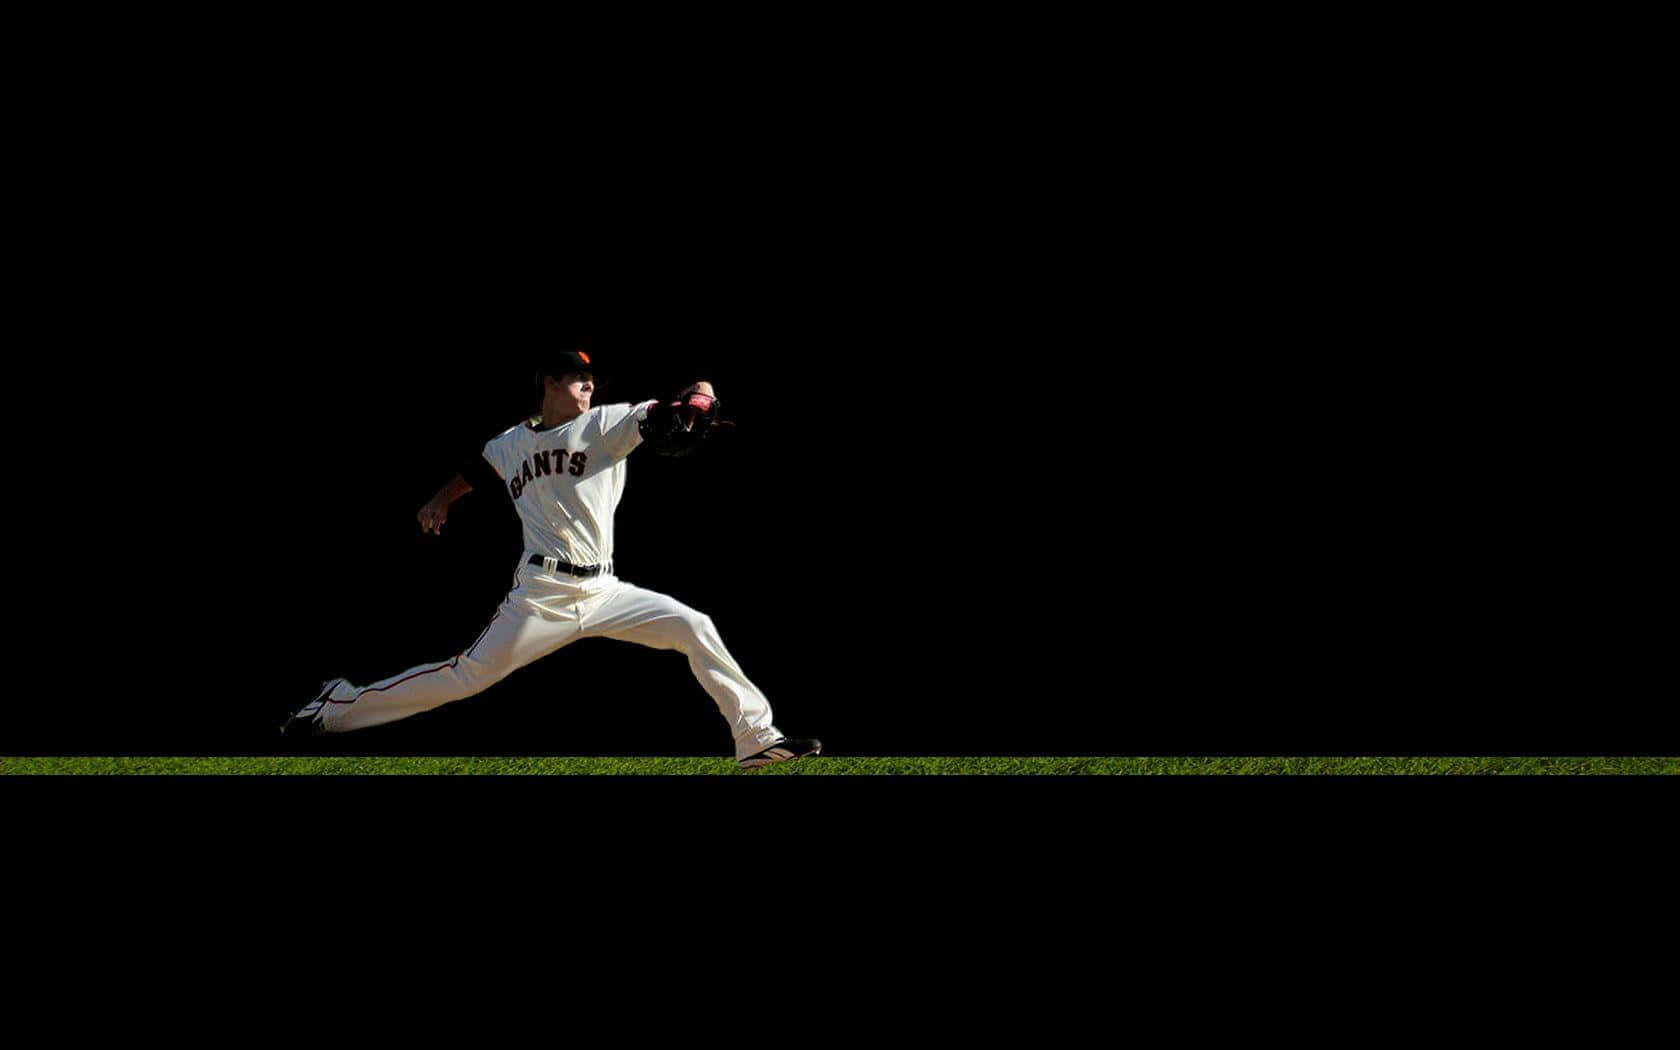 Jugadoresprofesionales De Béisbol Compiten En Un Juego Intenso Fondo de pantalla